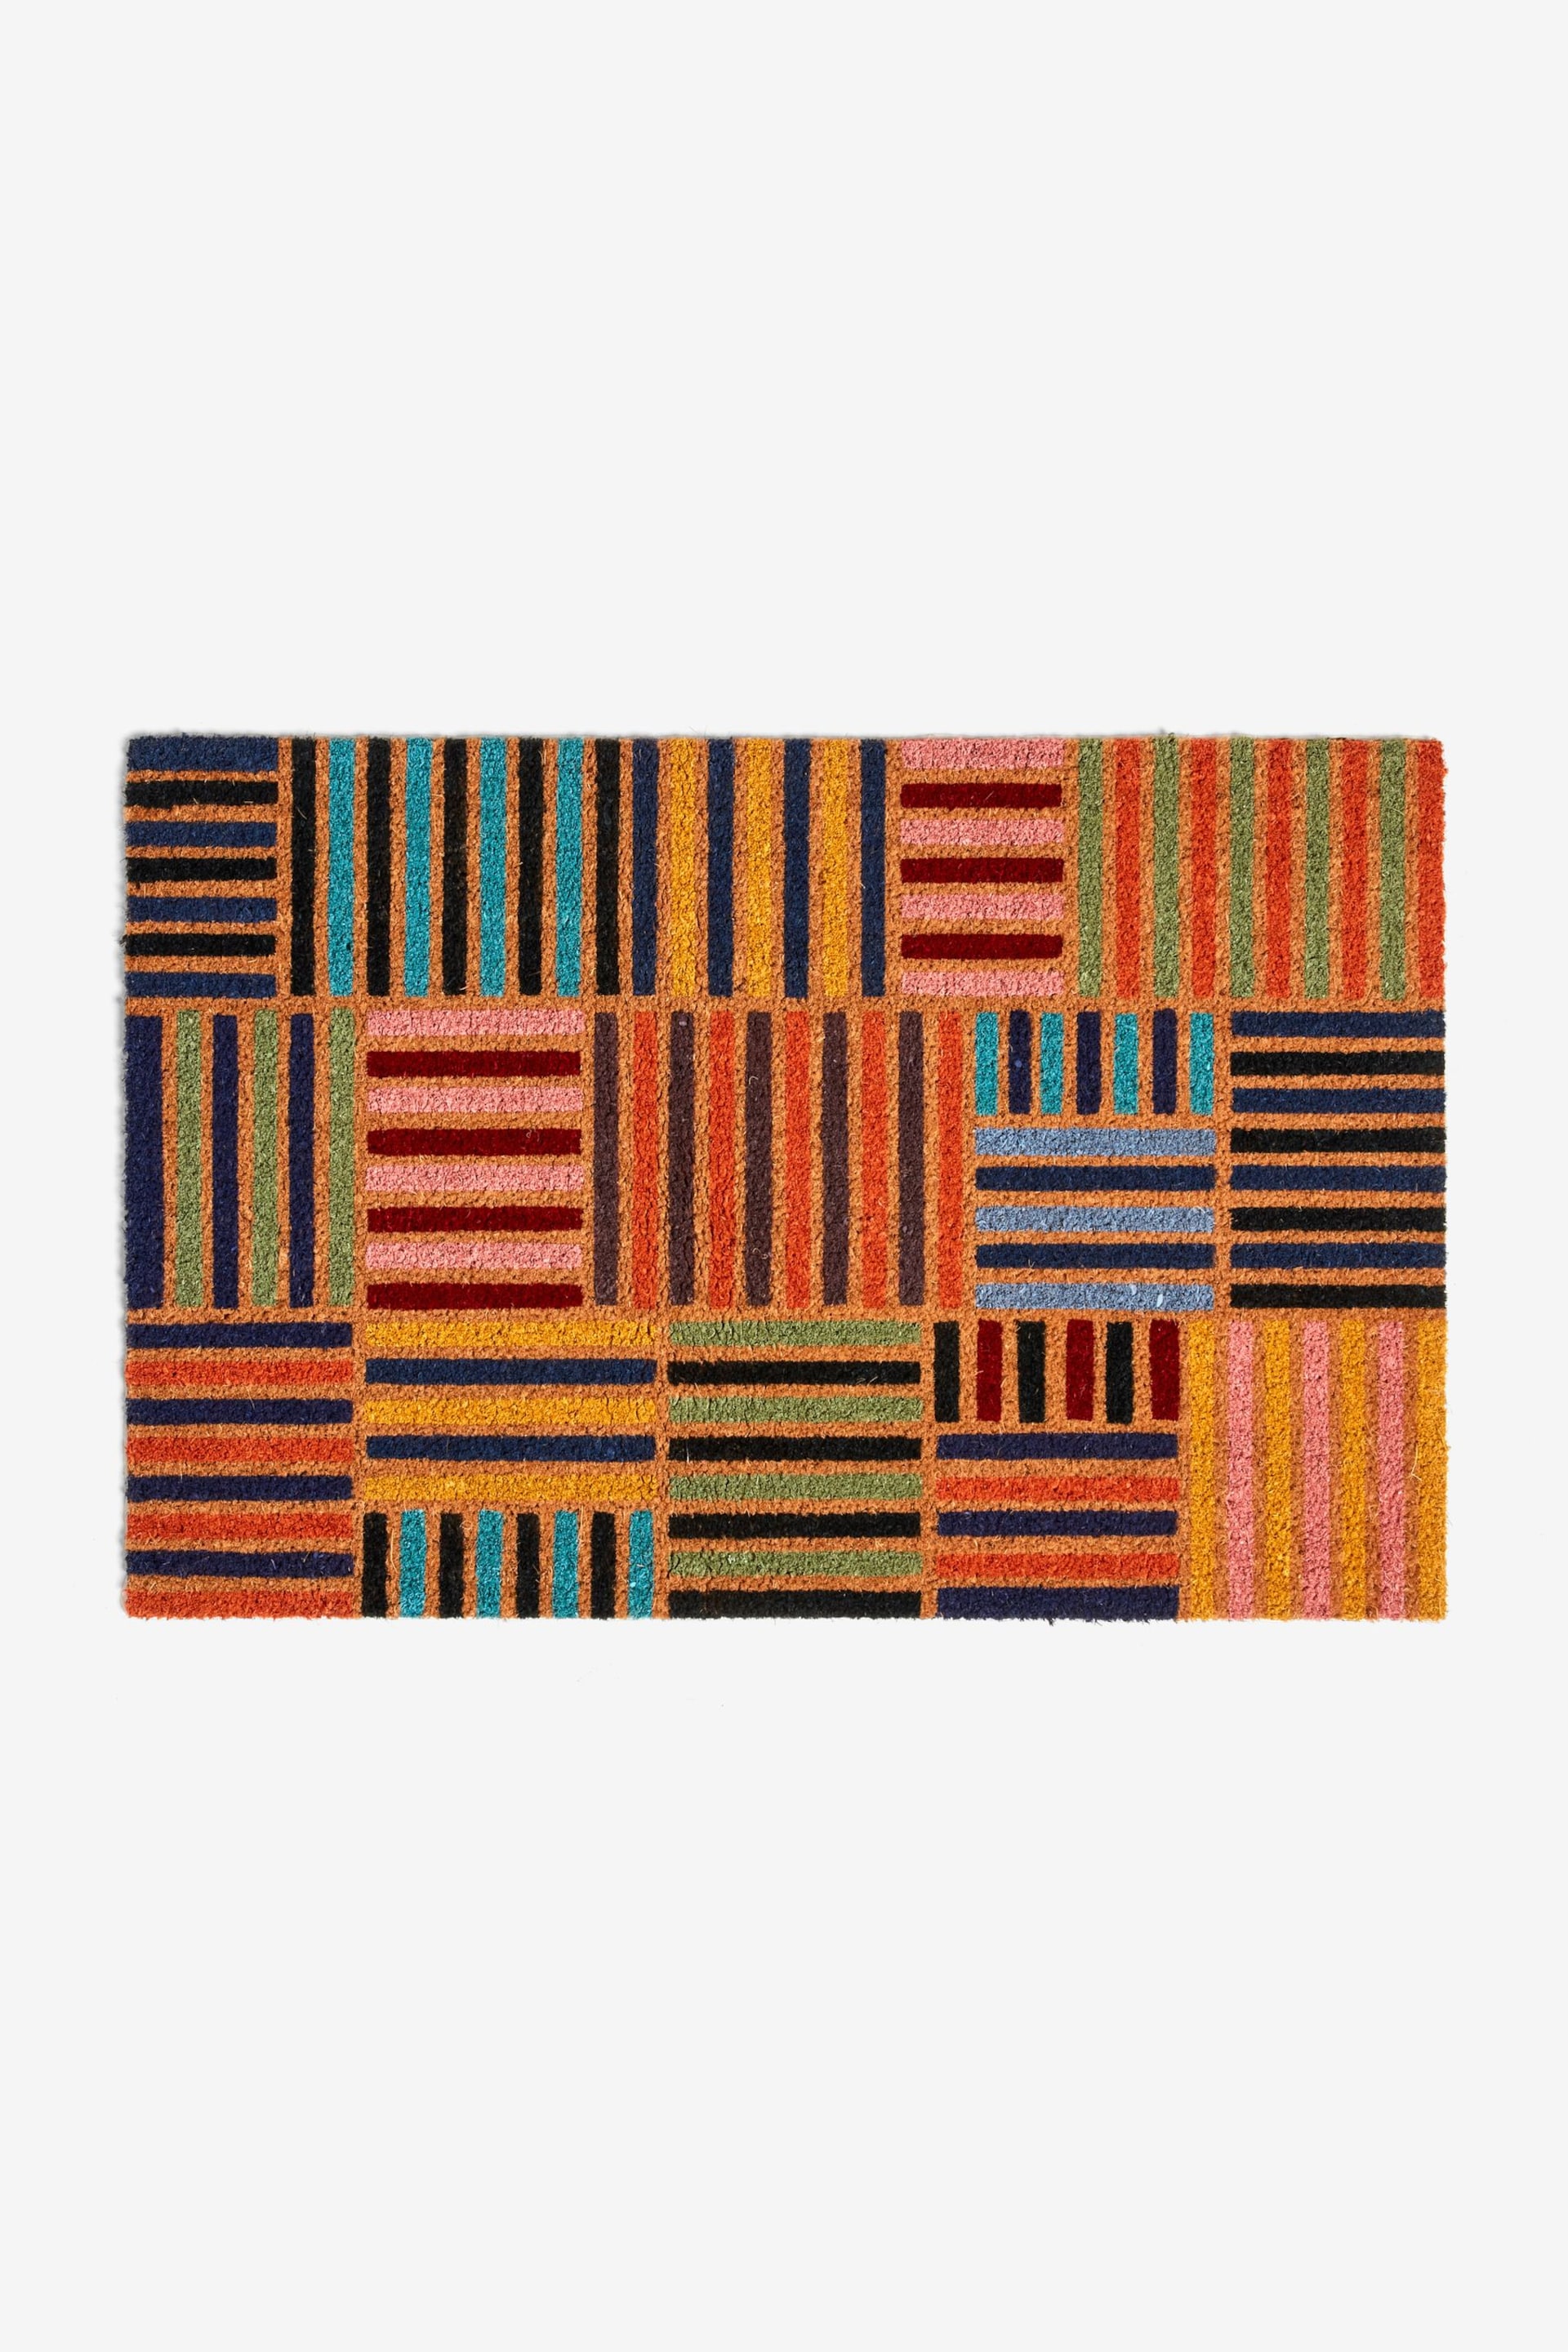 Multi Striped Doormat - Image 3 of 4